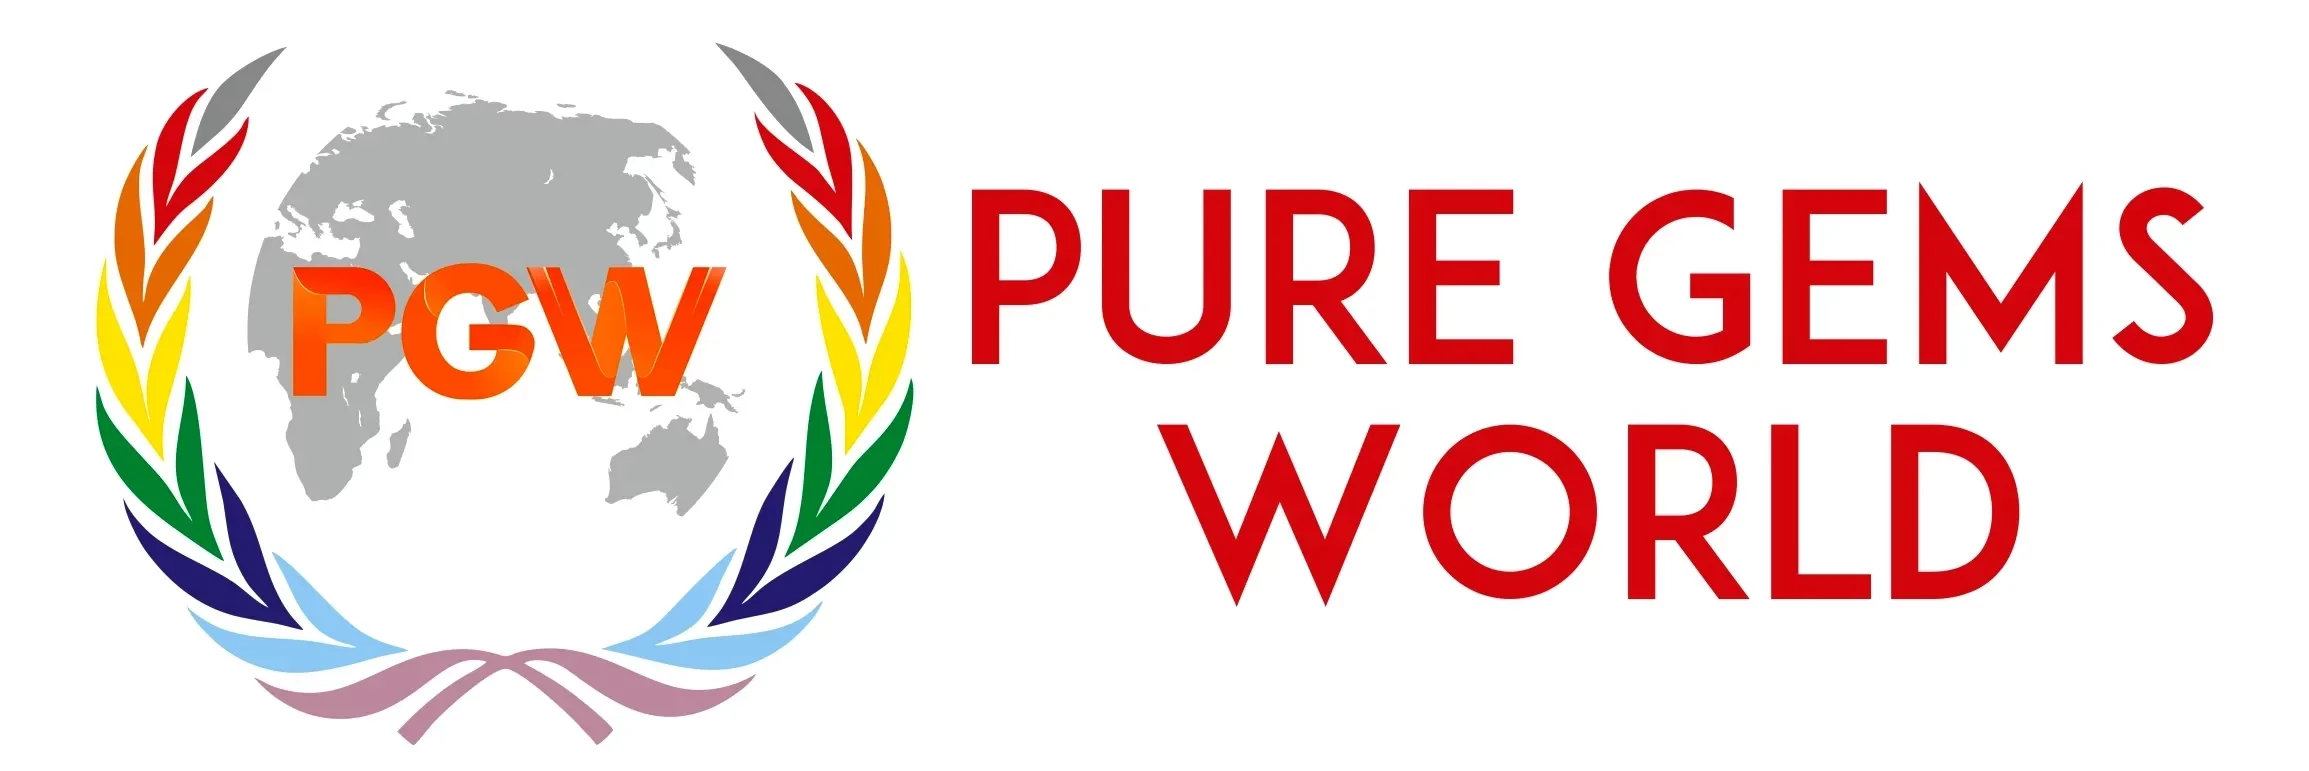 Pure gems world logo